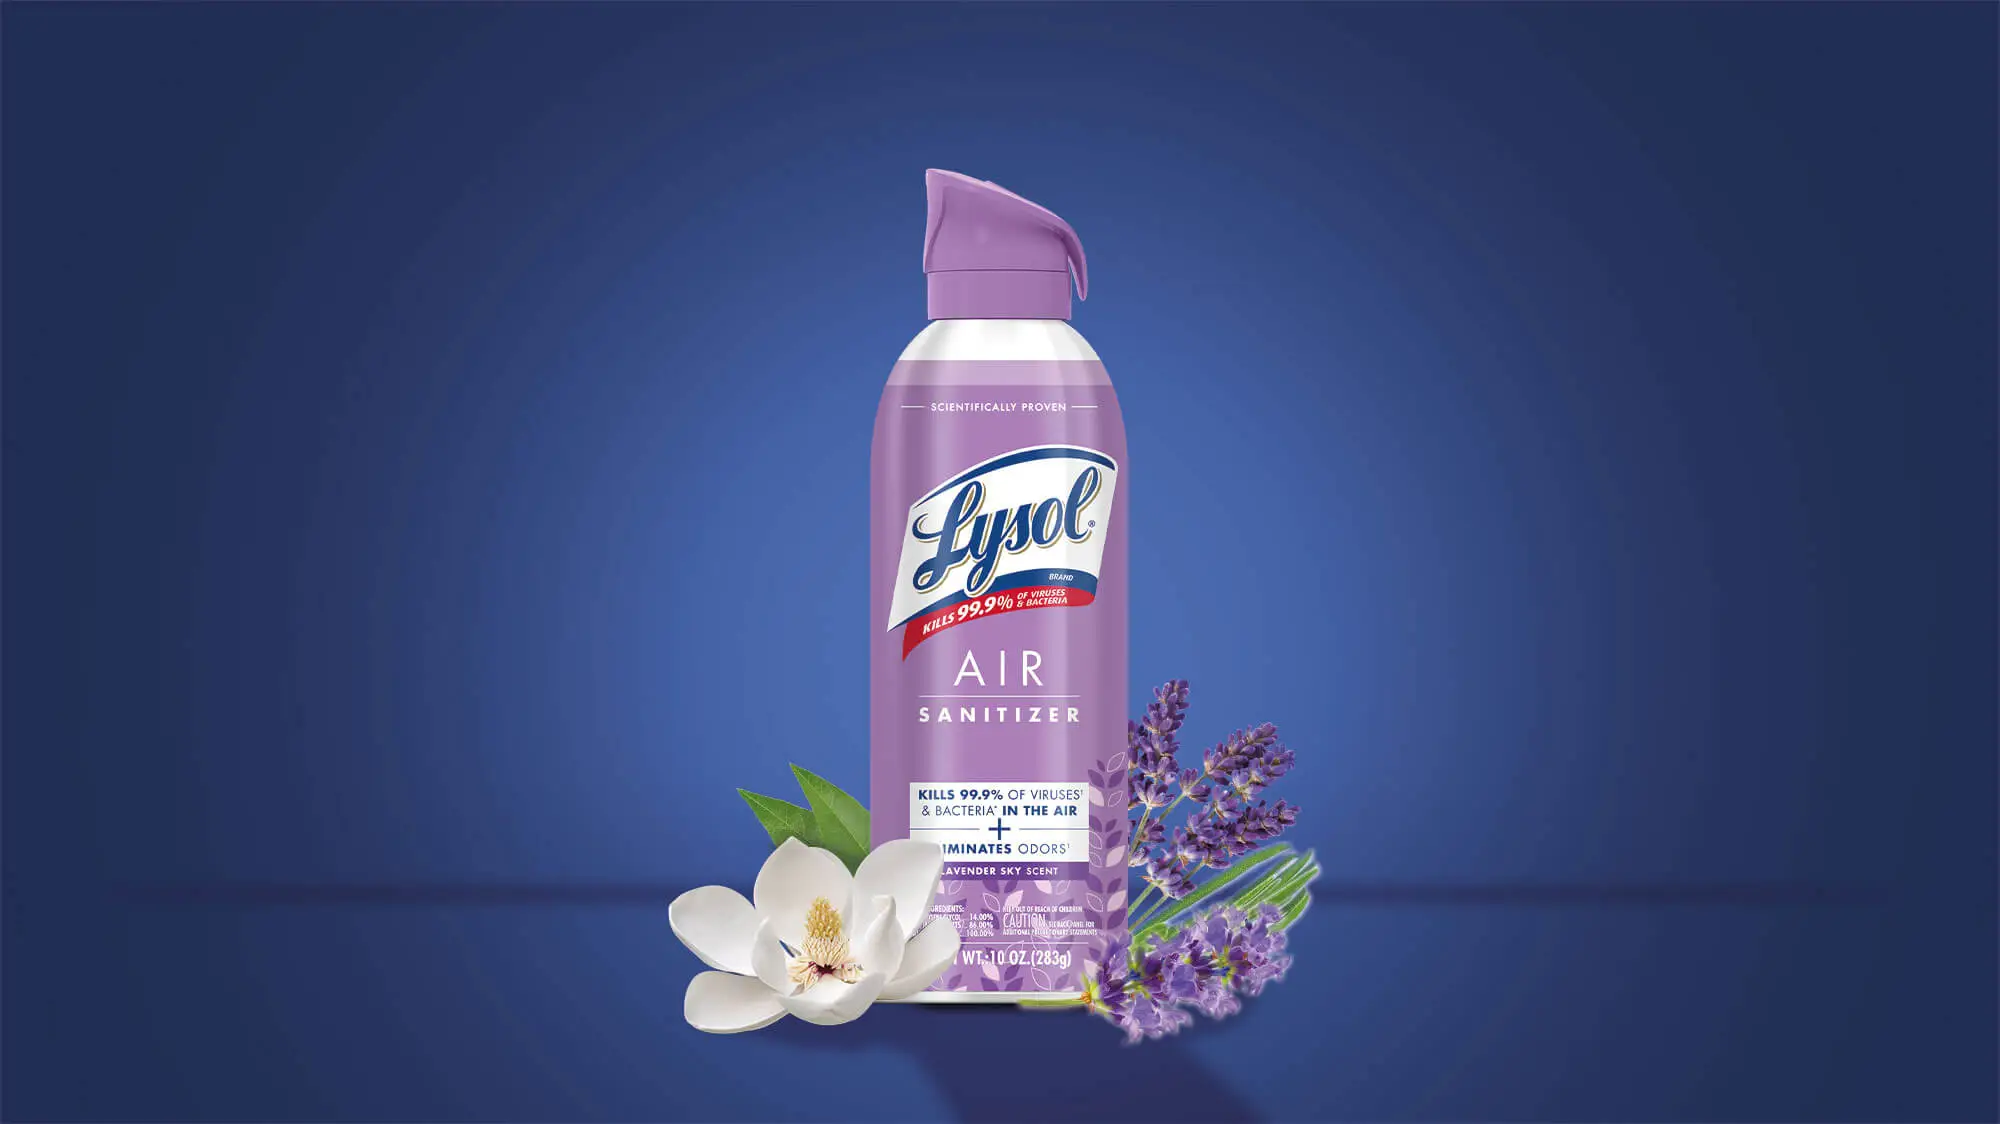 Lysol® Air Sanitizer Lavender Sky